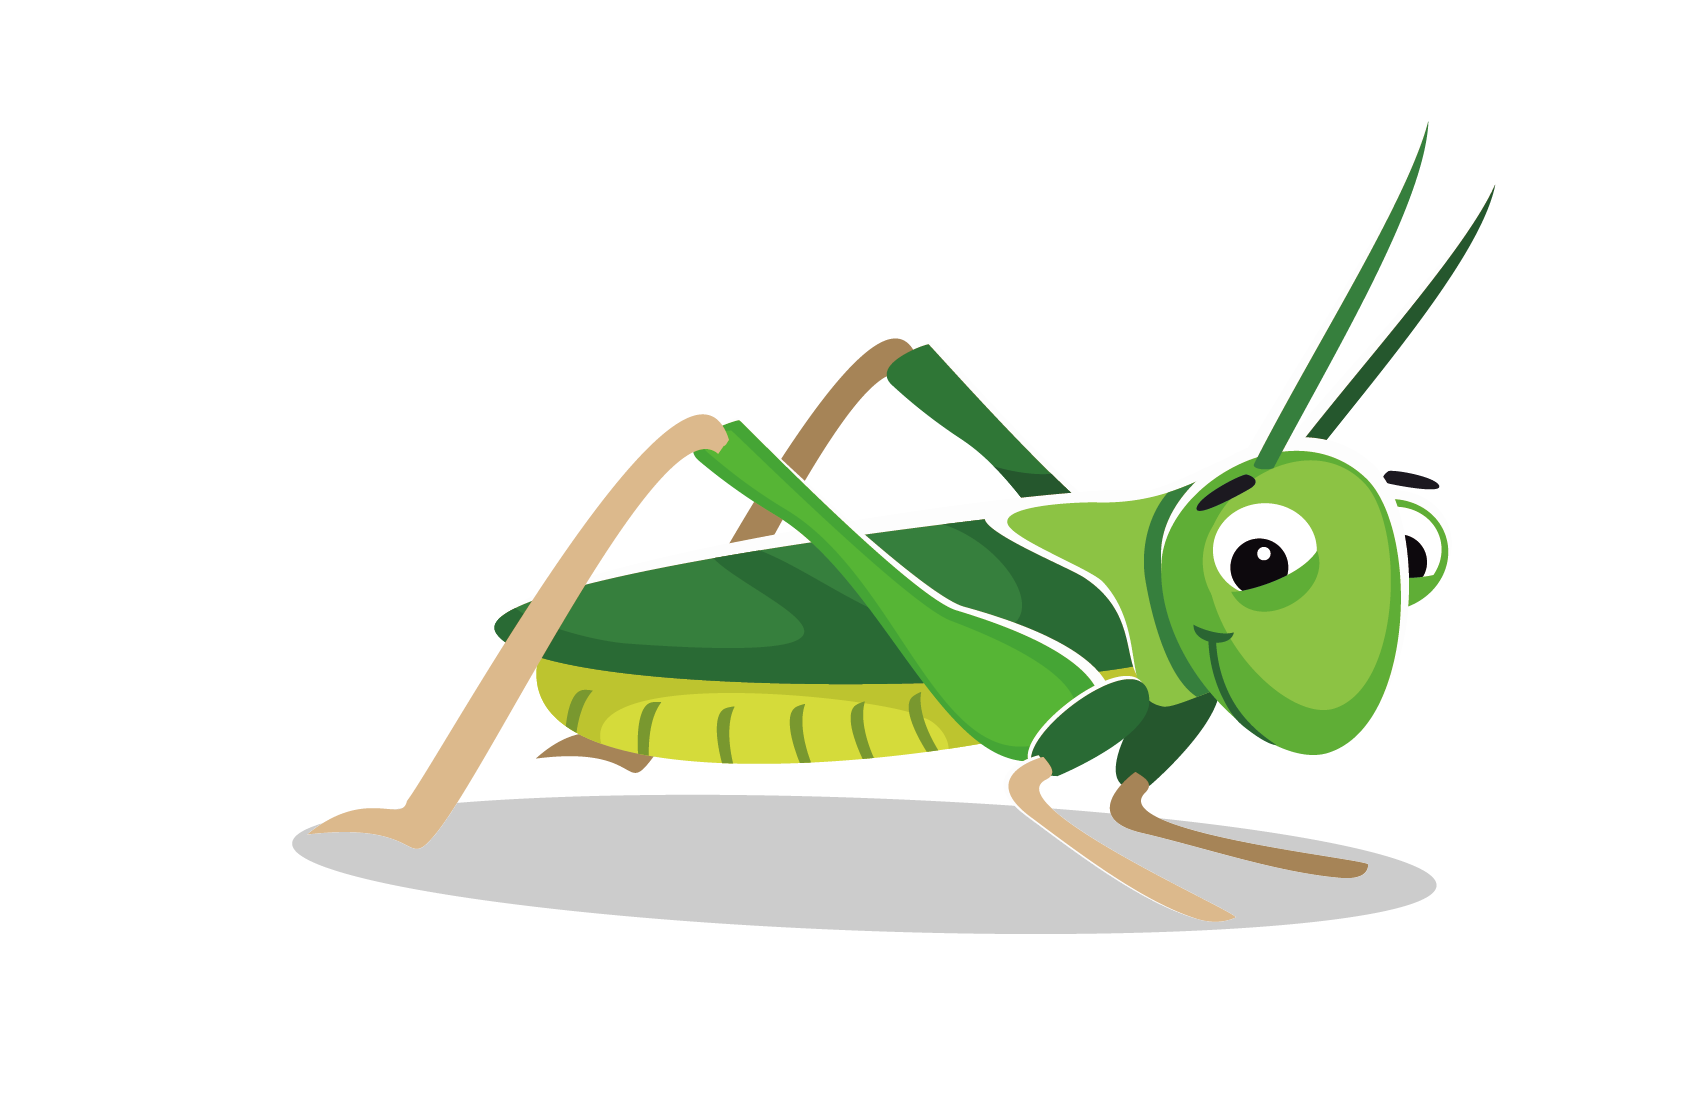 Grasshopper clipart comic, Grasshopper comic Transparent ...